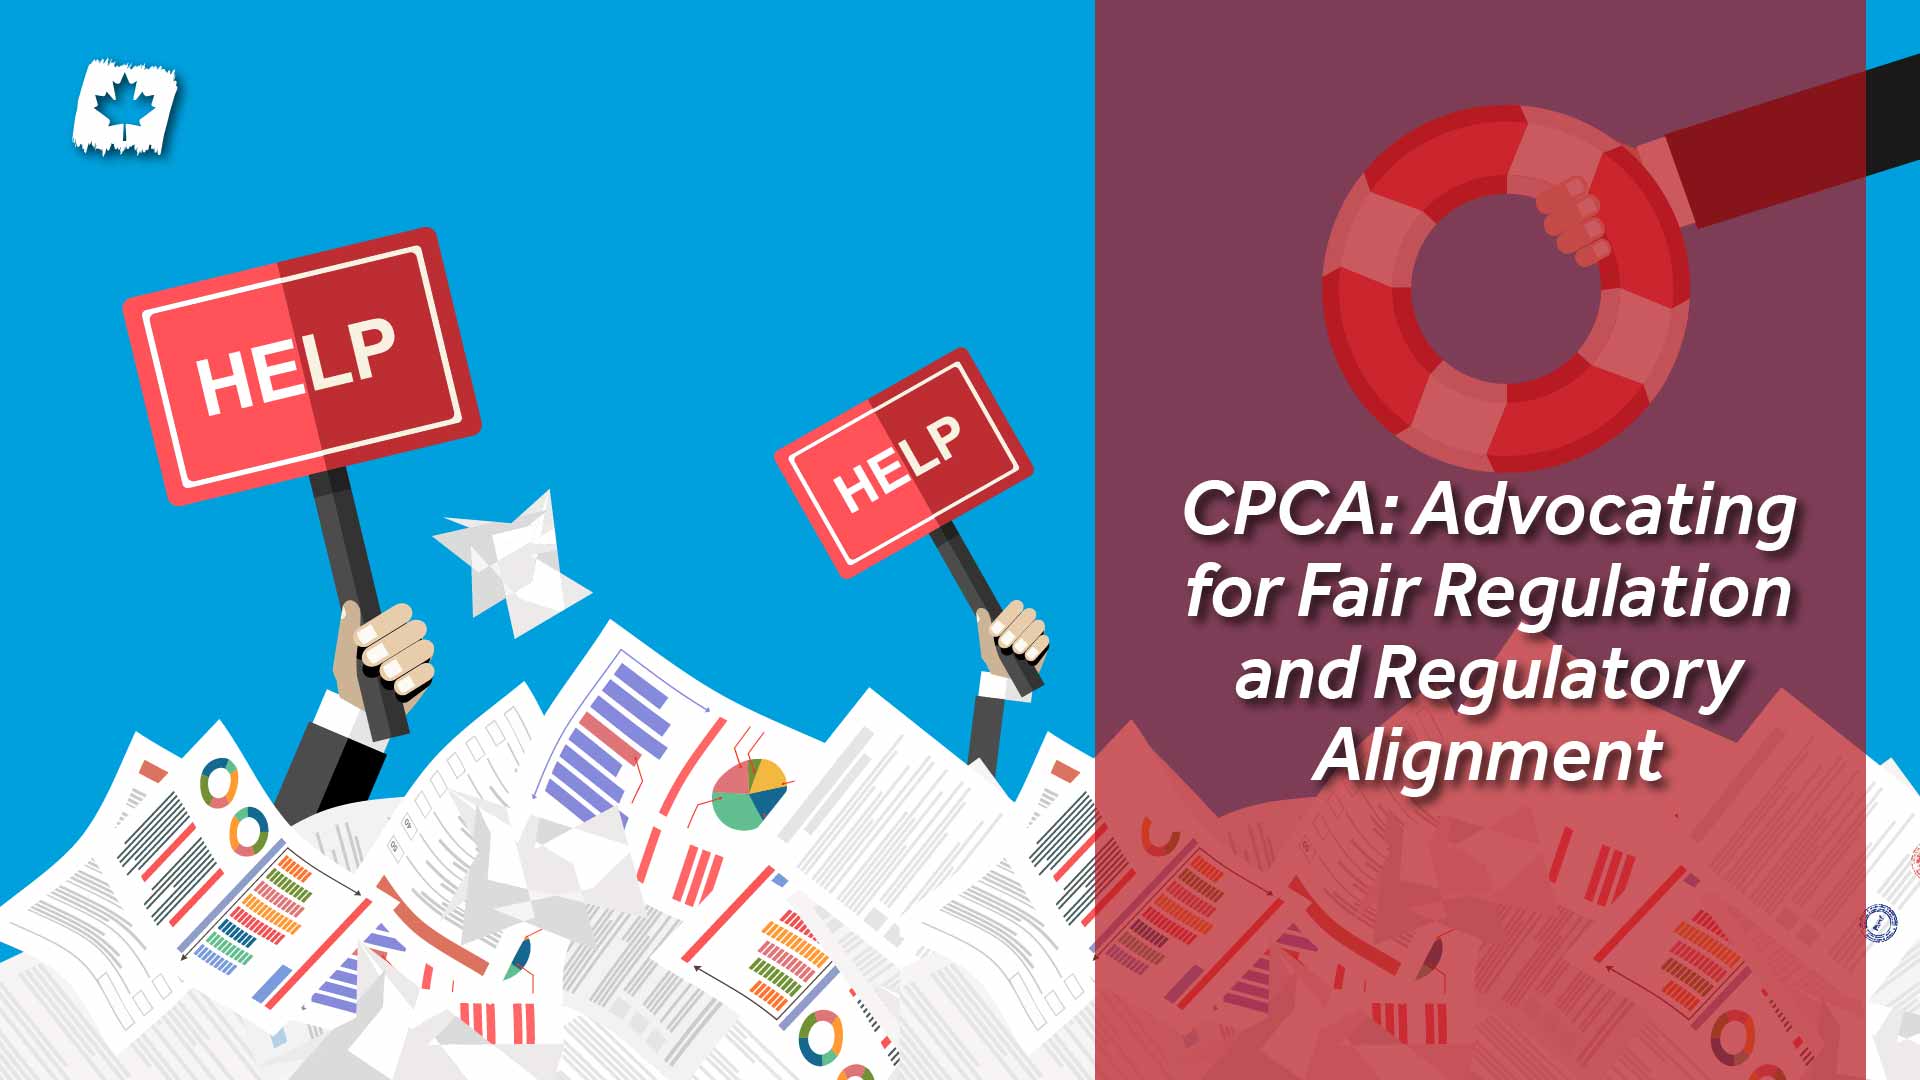 CPCA: Advocating for Fair Regulation and Regulatory Alignment